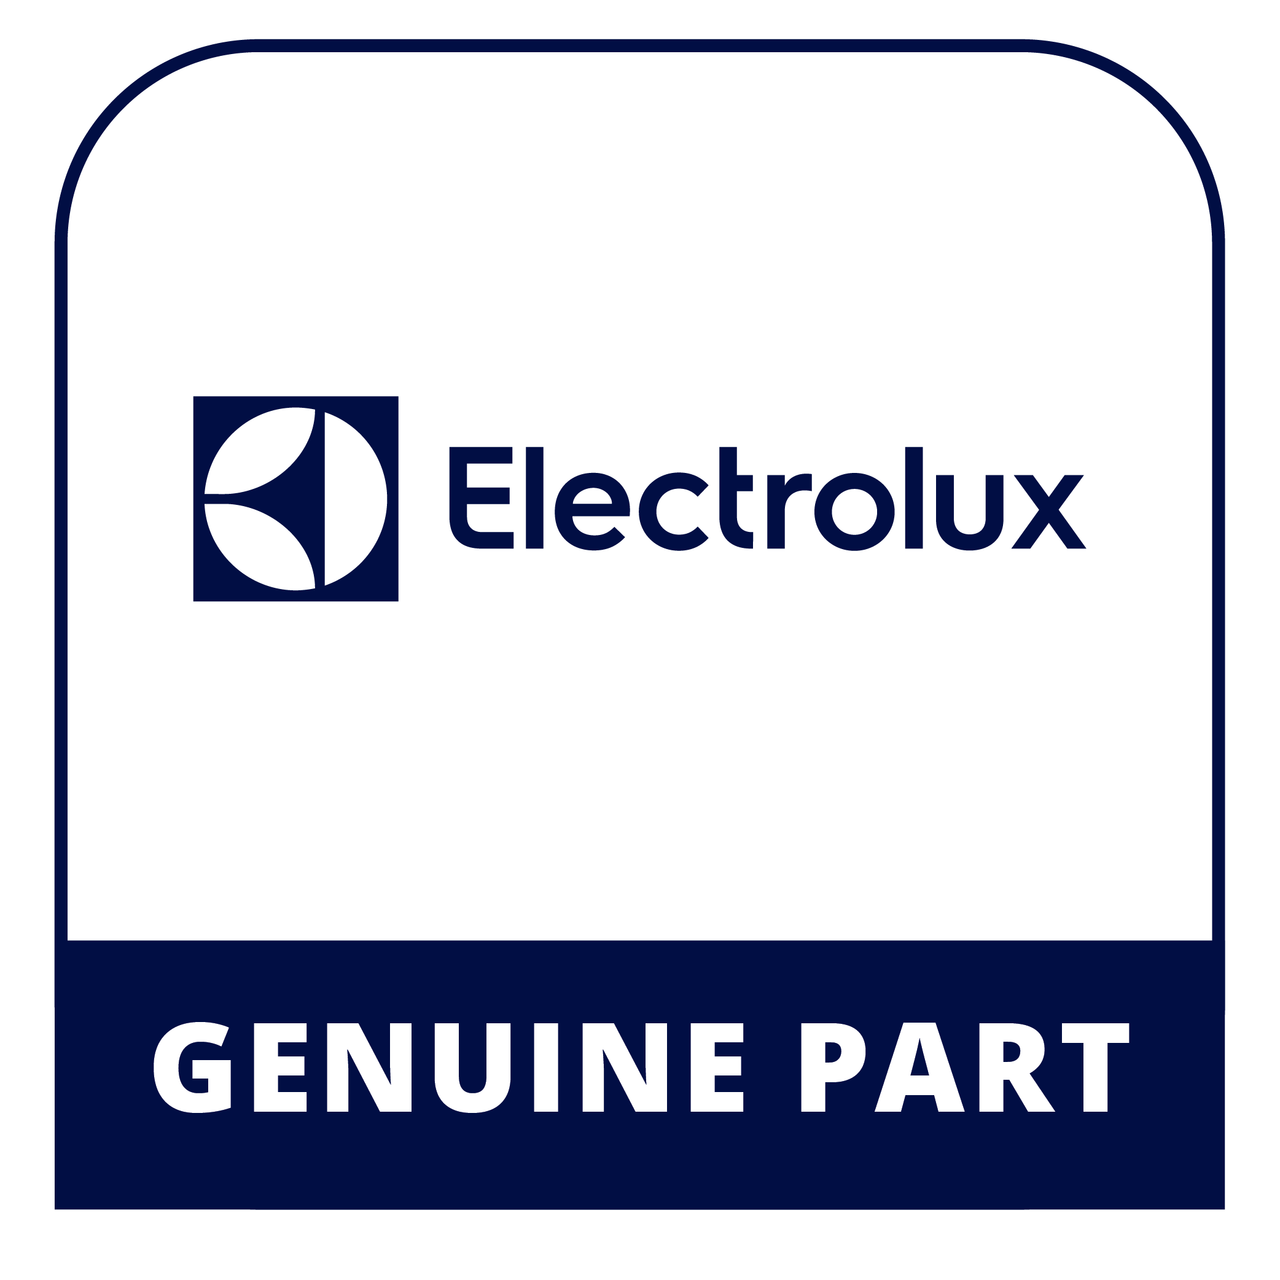 Frigidaire - Electrolux 5304500439 Cover - Genuine Electrolux Part